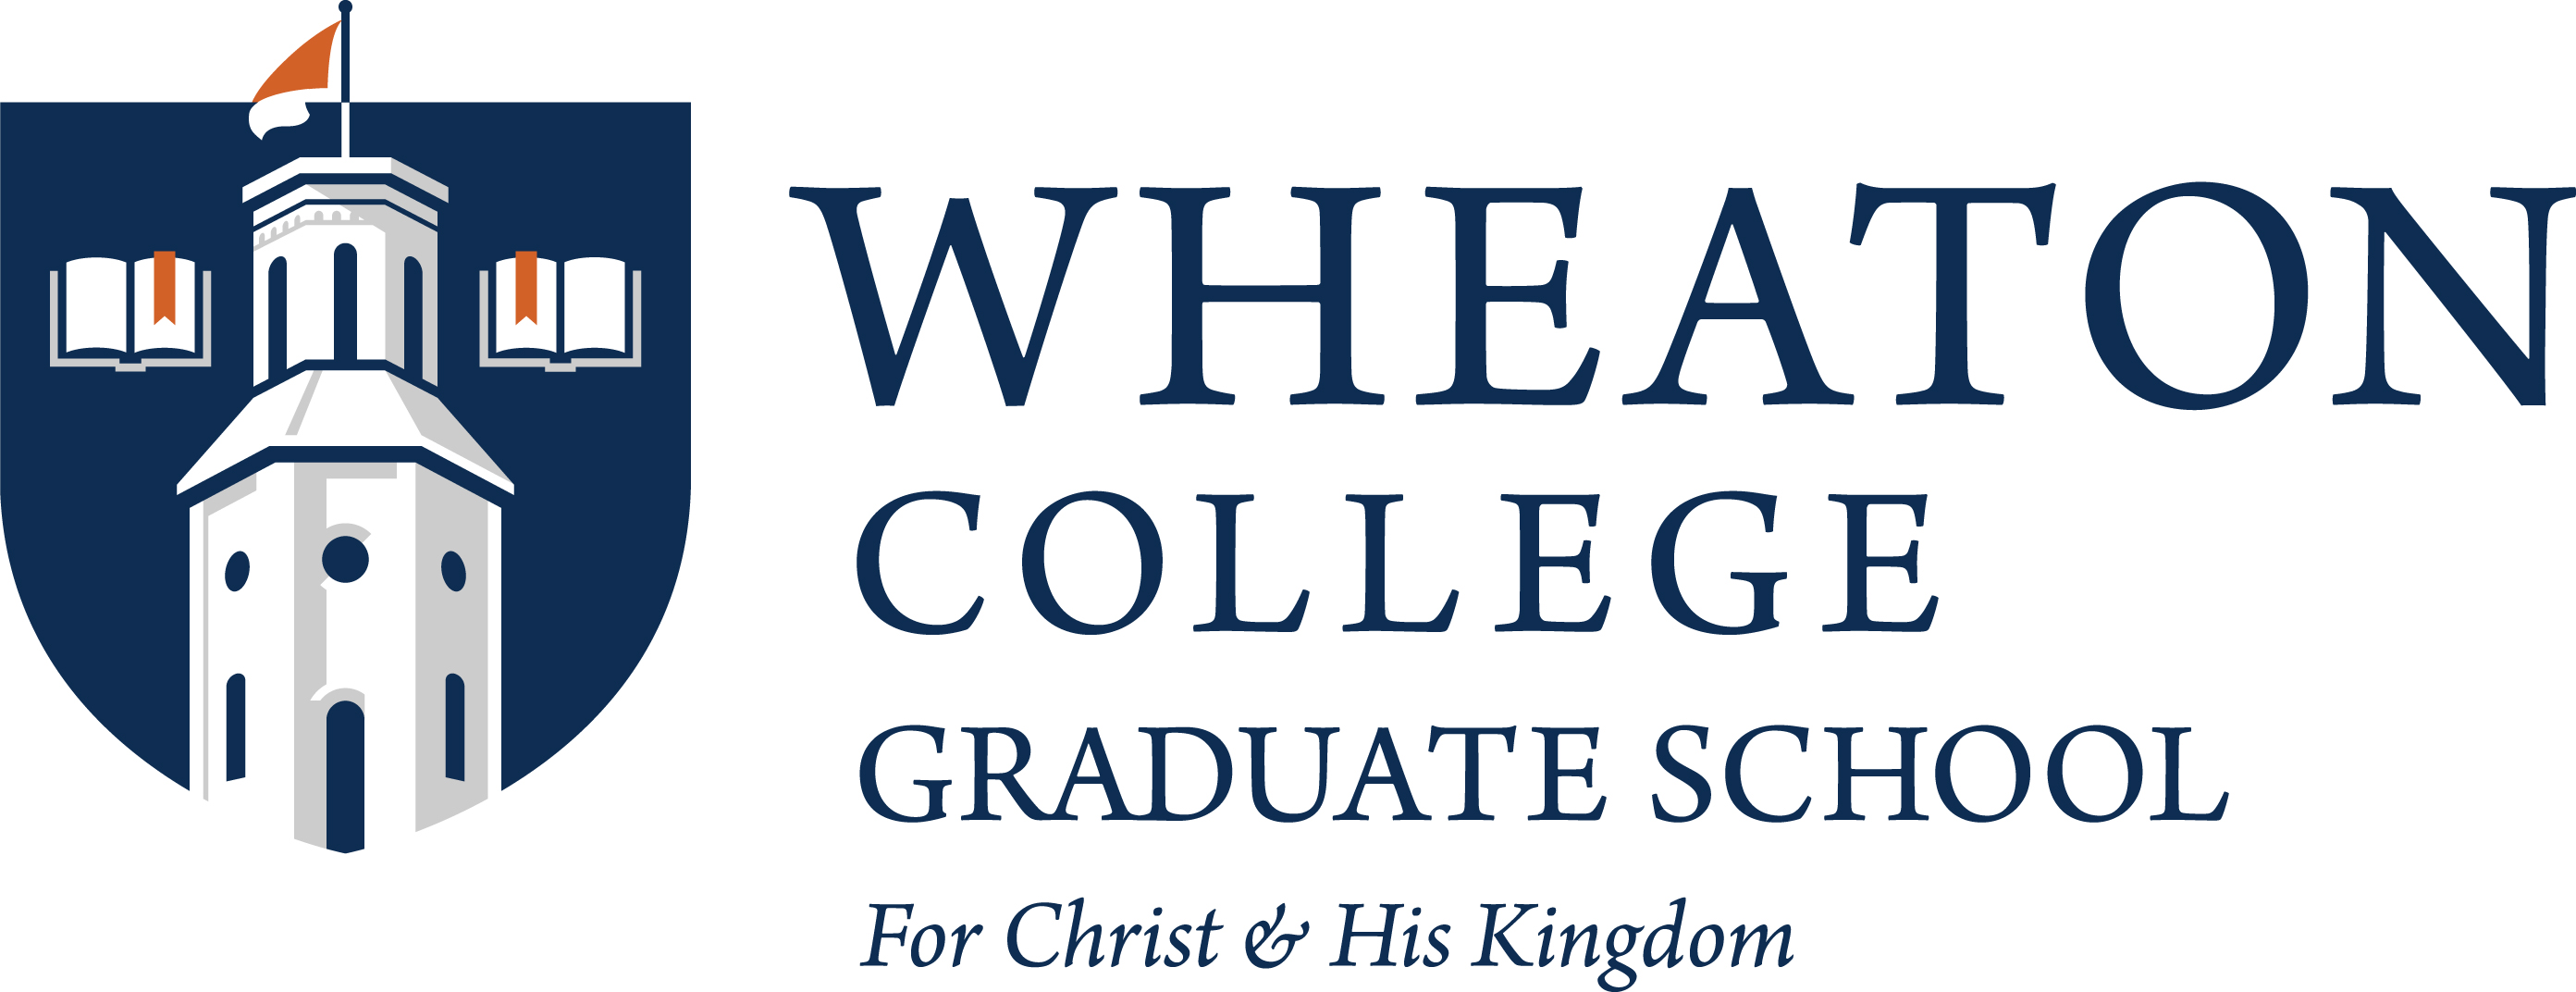 Horizontal color grad school logo for 2020